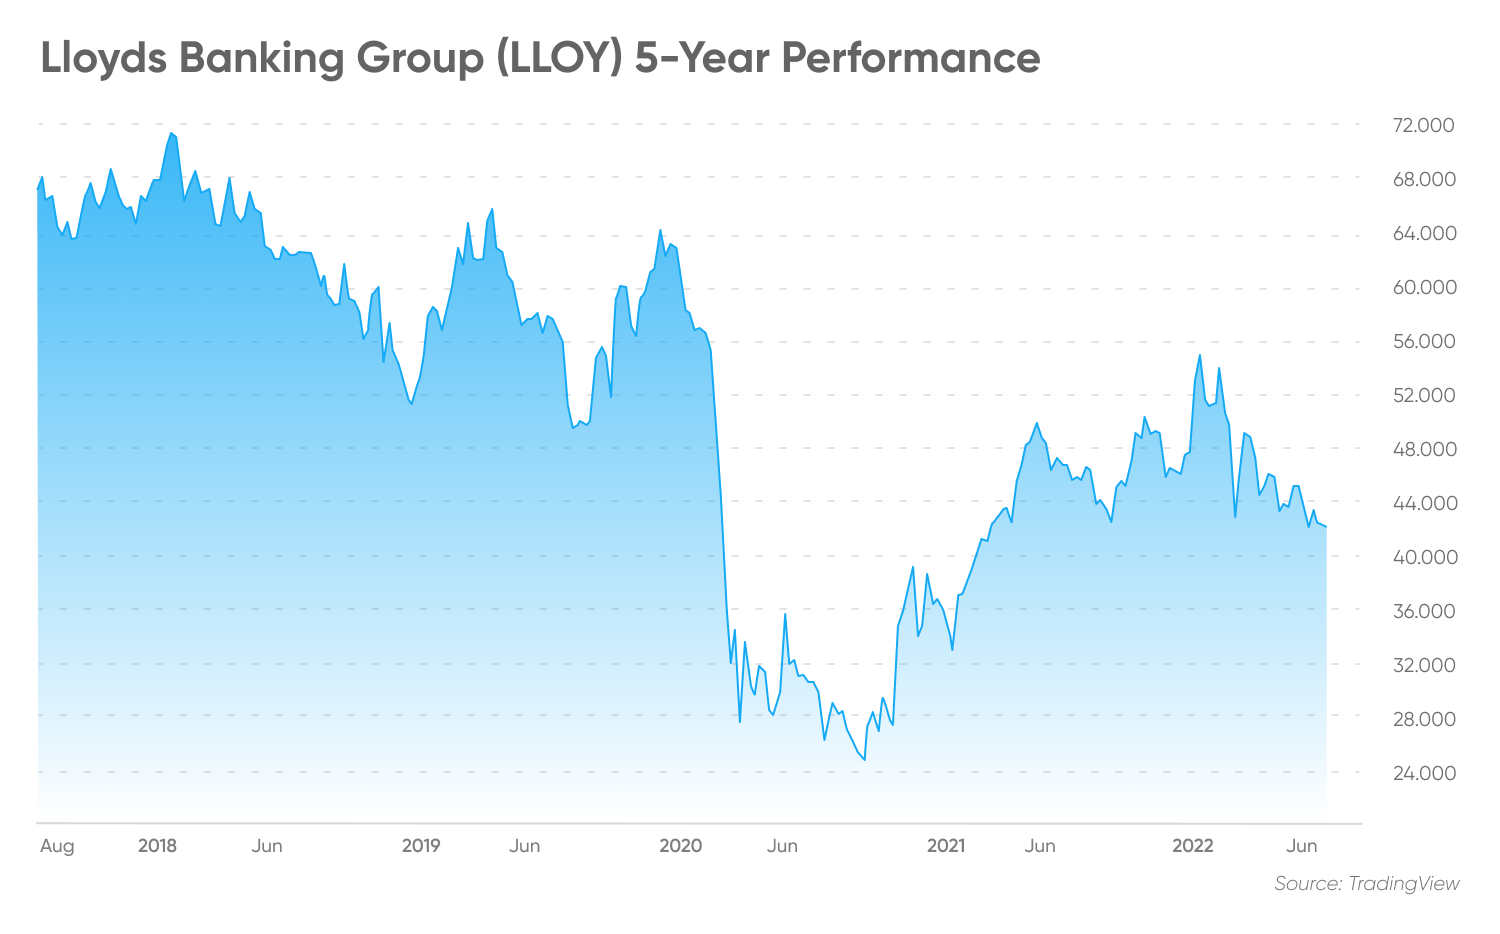 Lloyds Banking Group (LLOY) 5-Year Performance